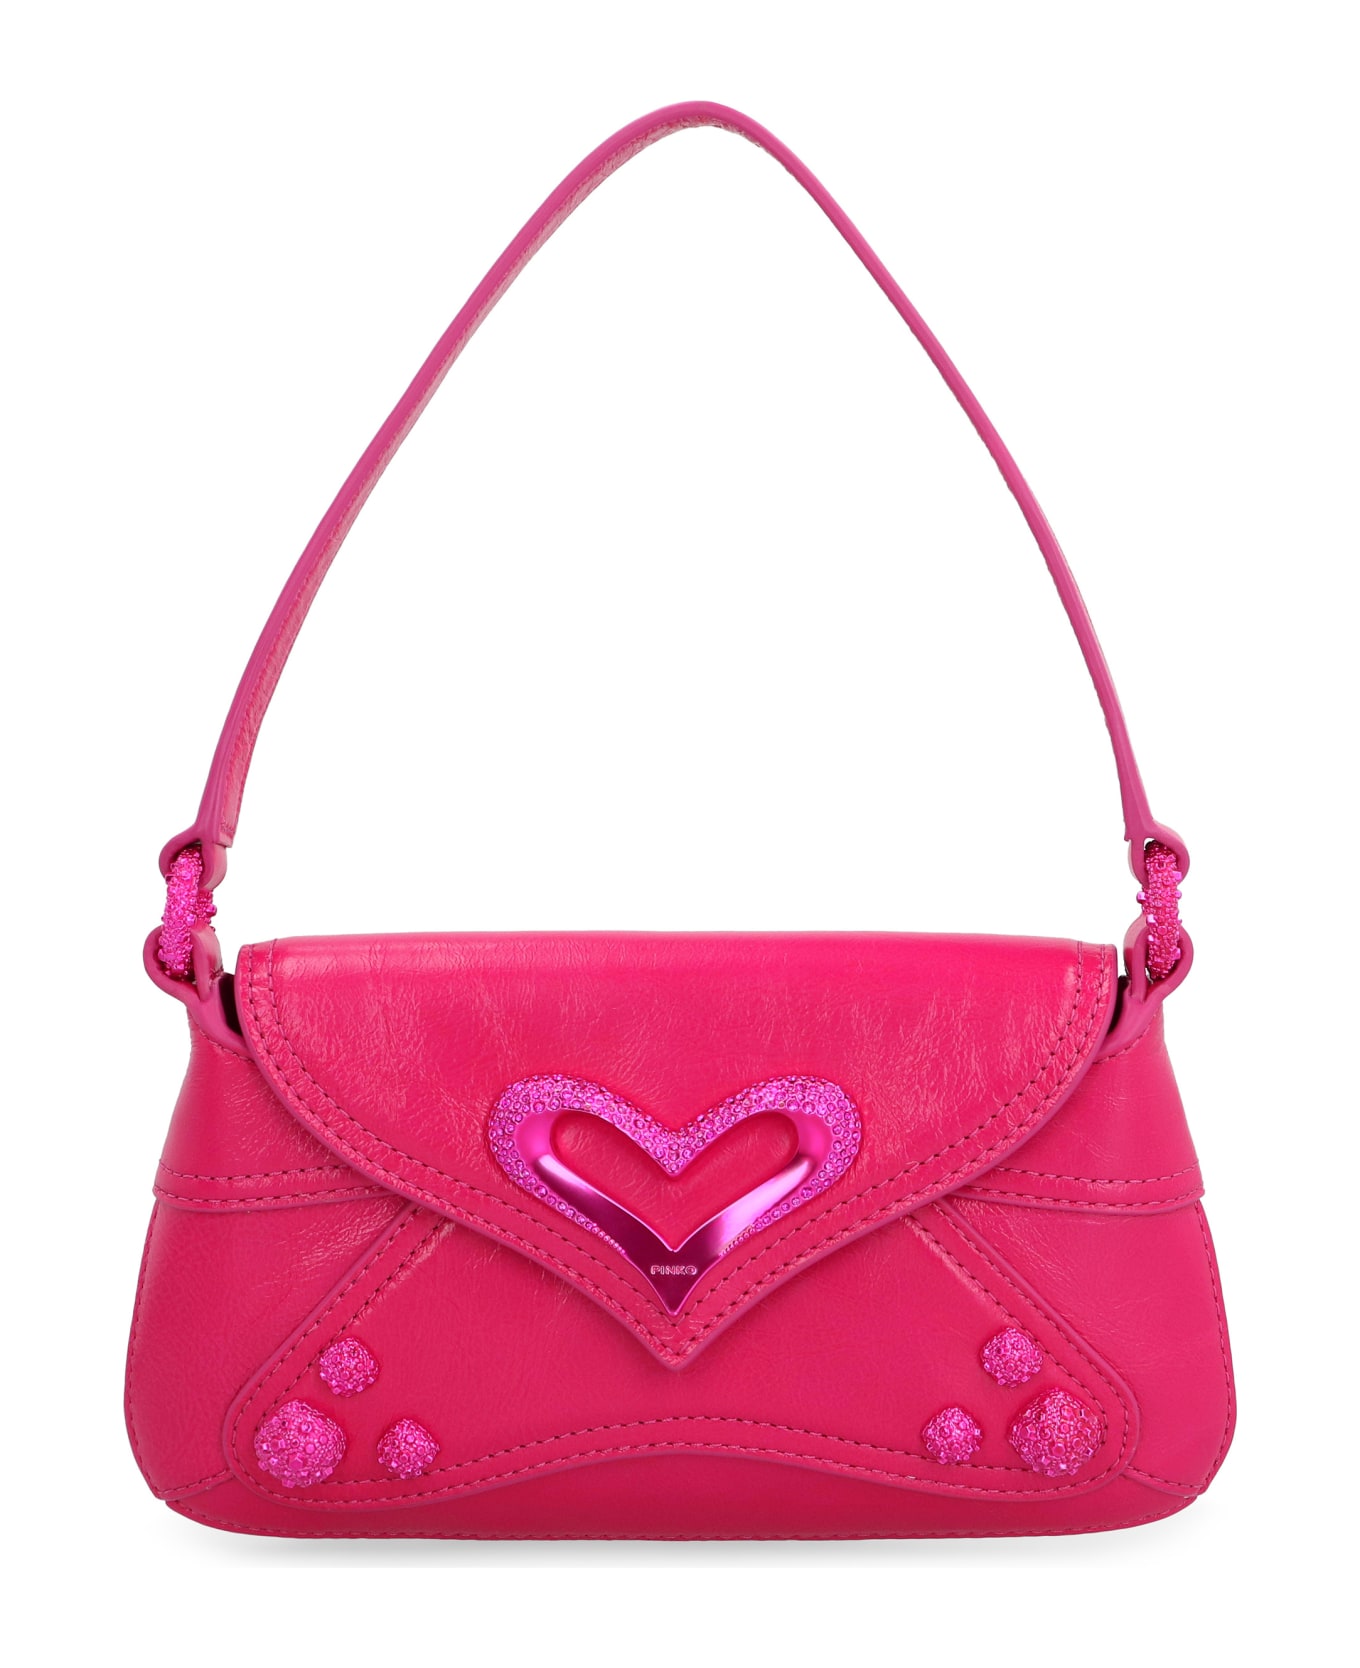 Pinko Baby 520 Bag Leather Bag - Fuchsia トートバッグ